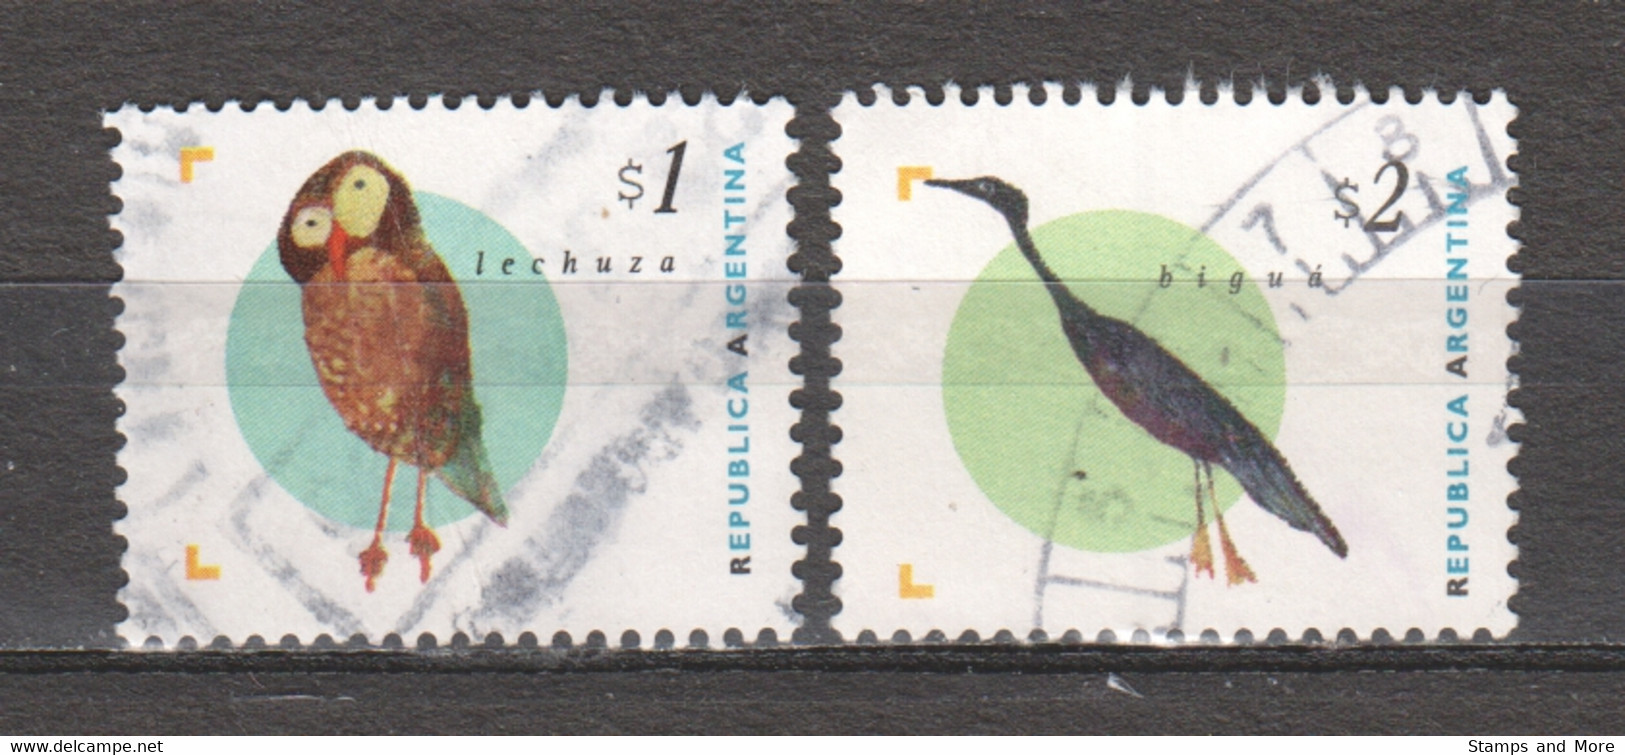 Argentina 1995 Mi 2266-2267 Canceled BIRDS - Used Stamps